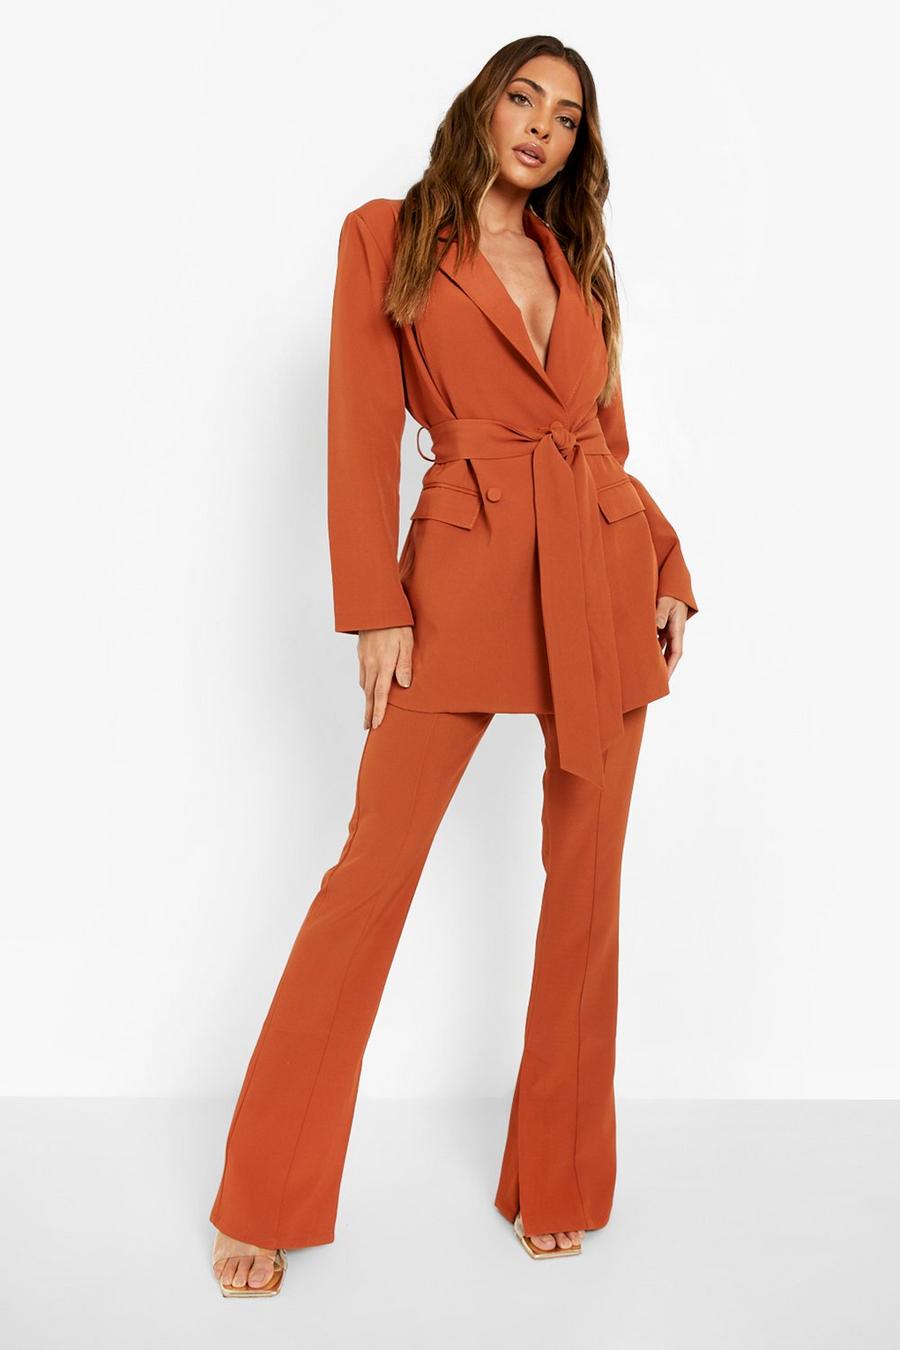 Terracotta orange Split Side Pin Tuck Front Dress Pants